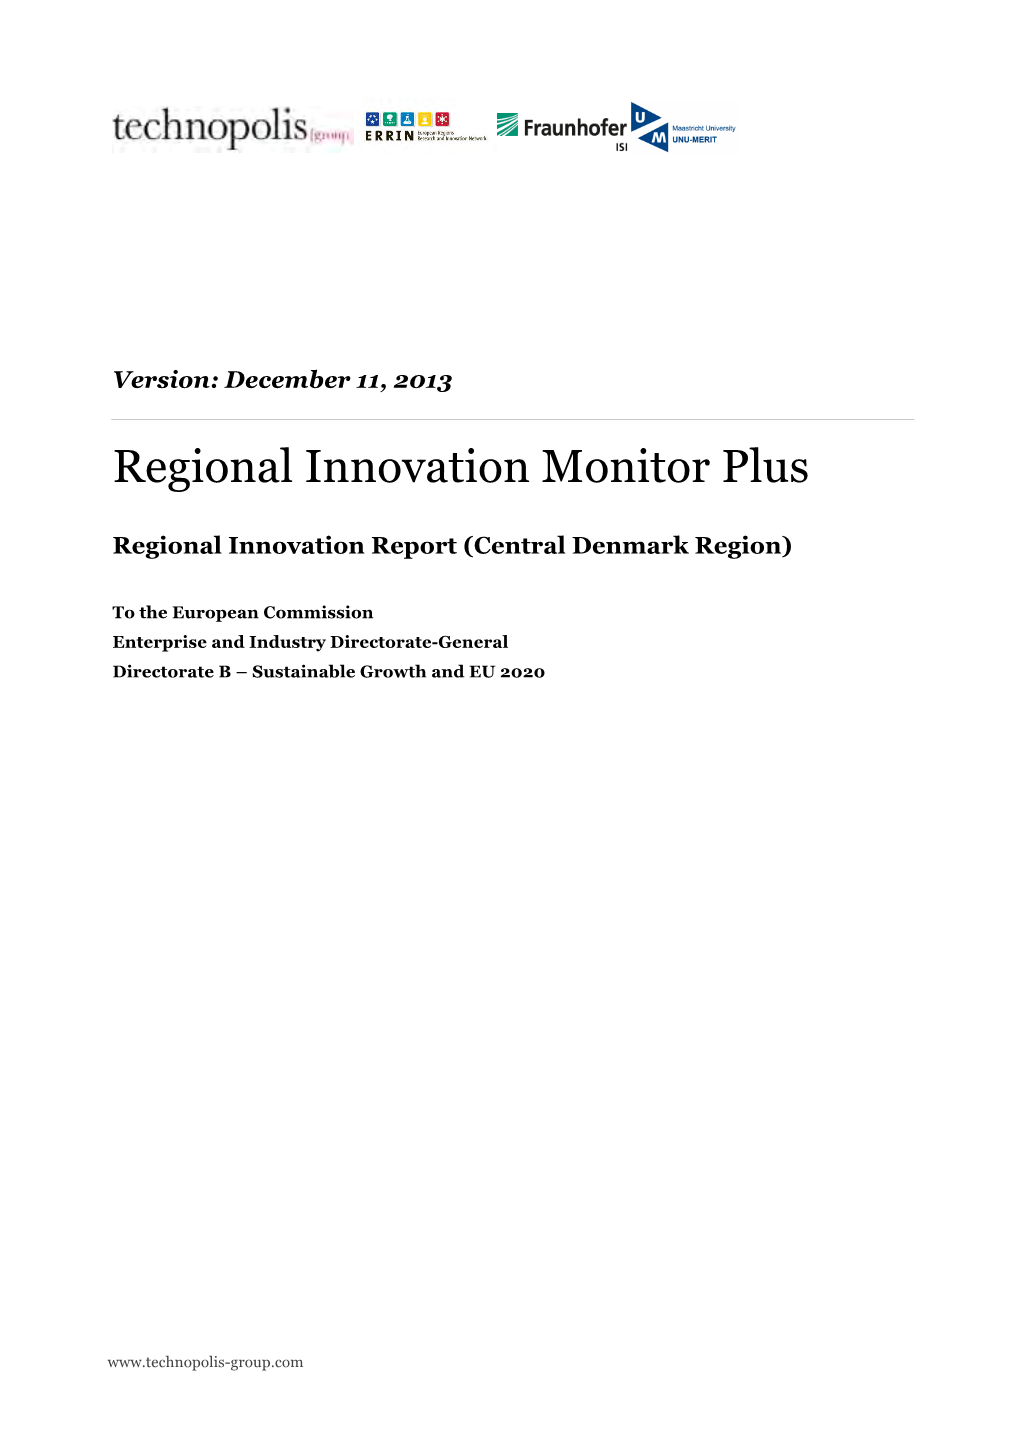 Regional Innovation Monitor Plus